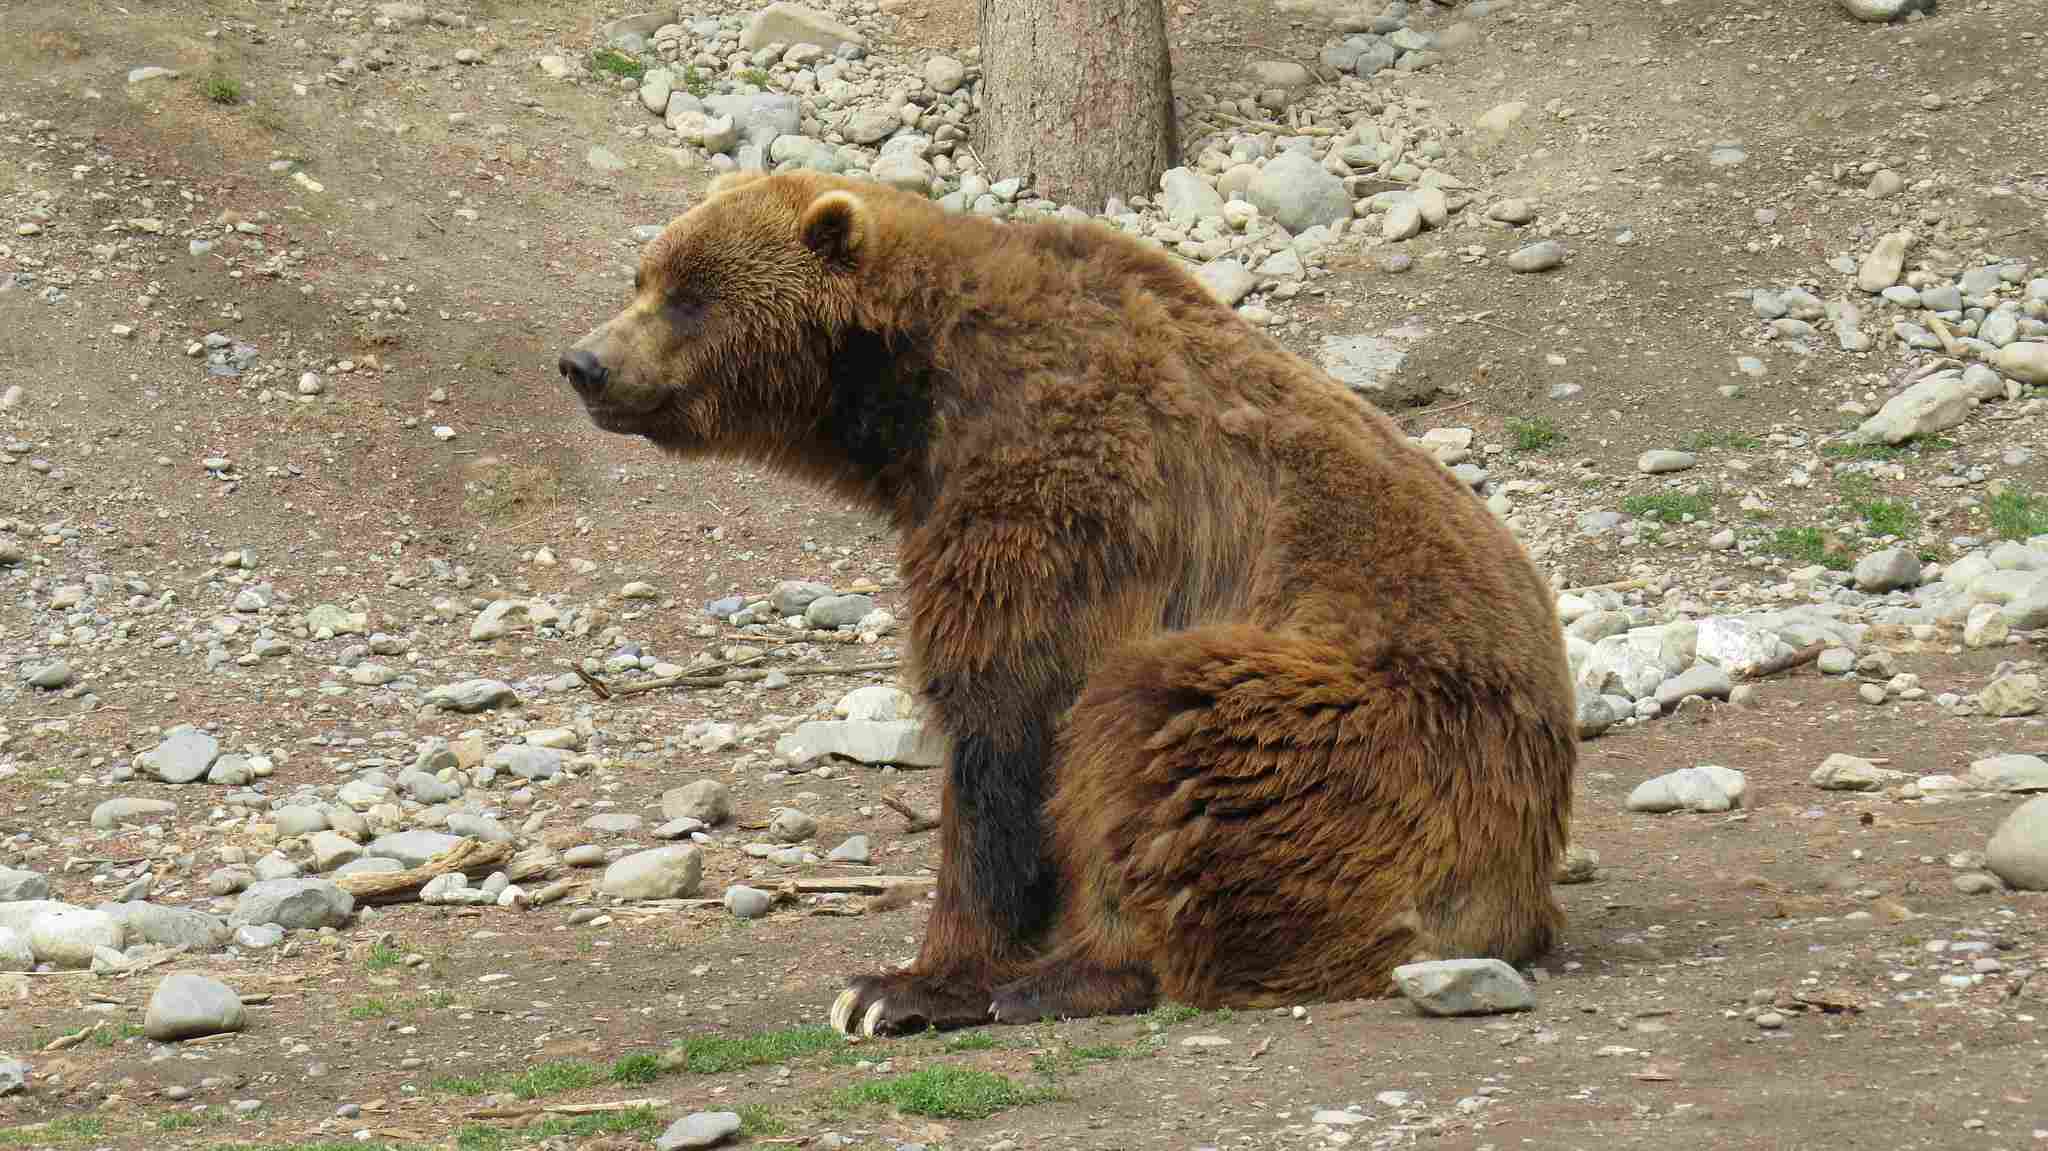 Rhino Vs Bear: Many Bears are Solitary, like Rhinos (Credit: Luke Jones 2014 .CC BY 2.0.)